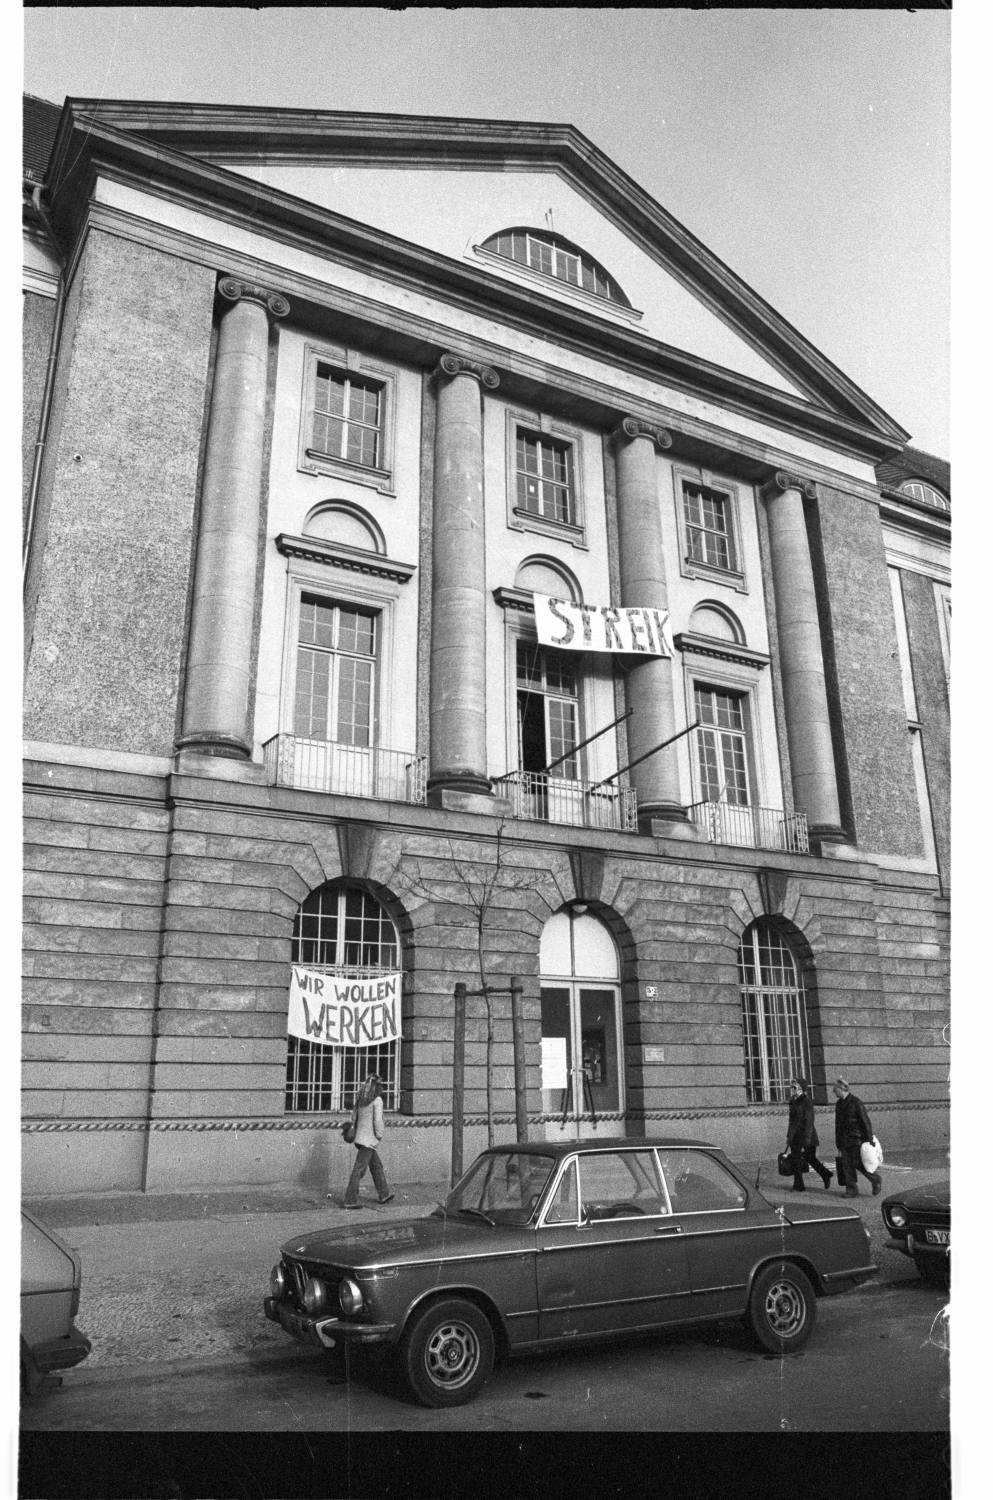 Kleinbildnegative: HdK, Grunewaldstr. 2-5, 1981 (Museen Tempelhof-Schöneberg/Jürgen Henschel RR-F)